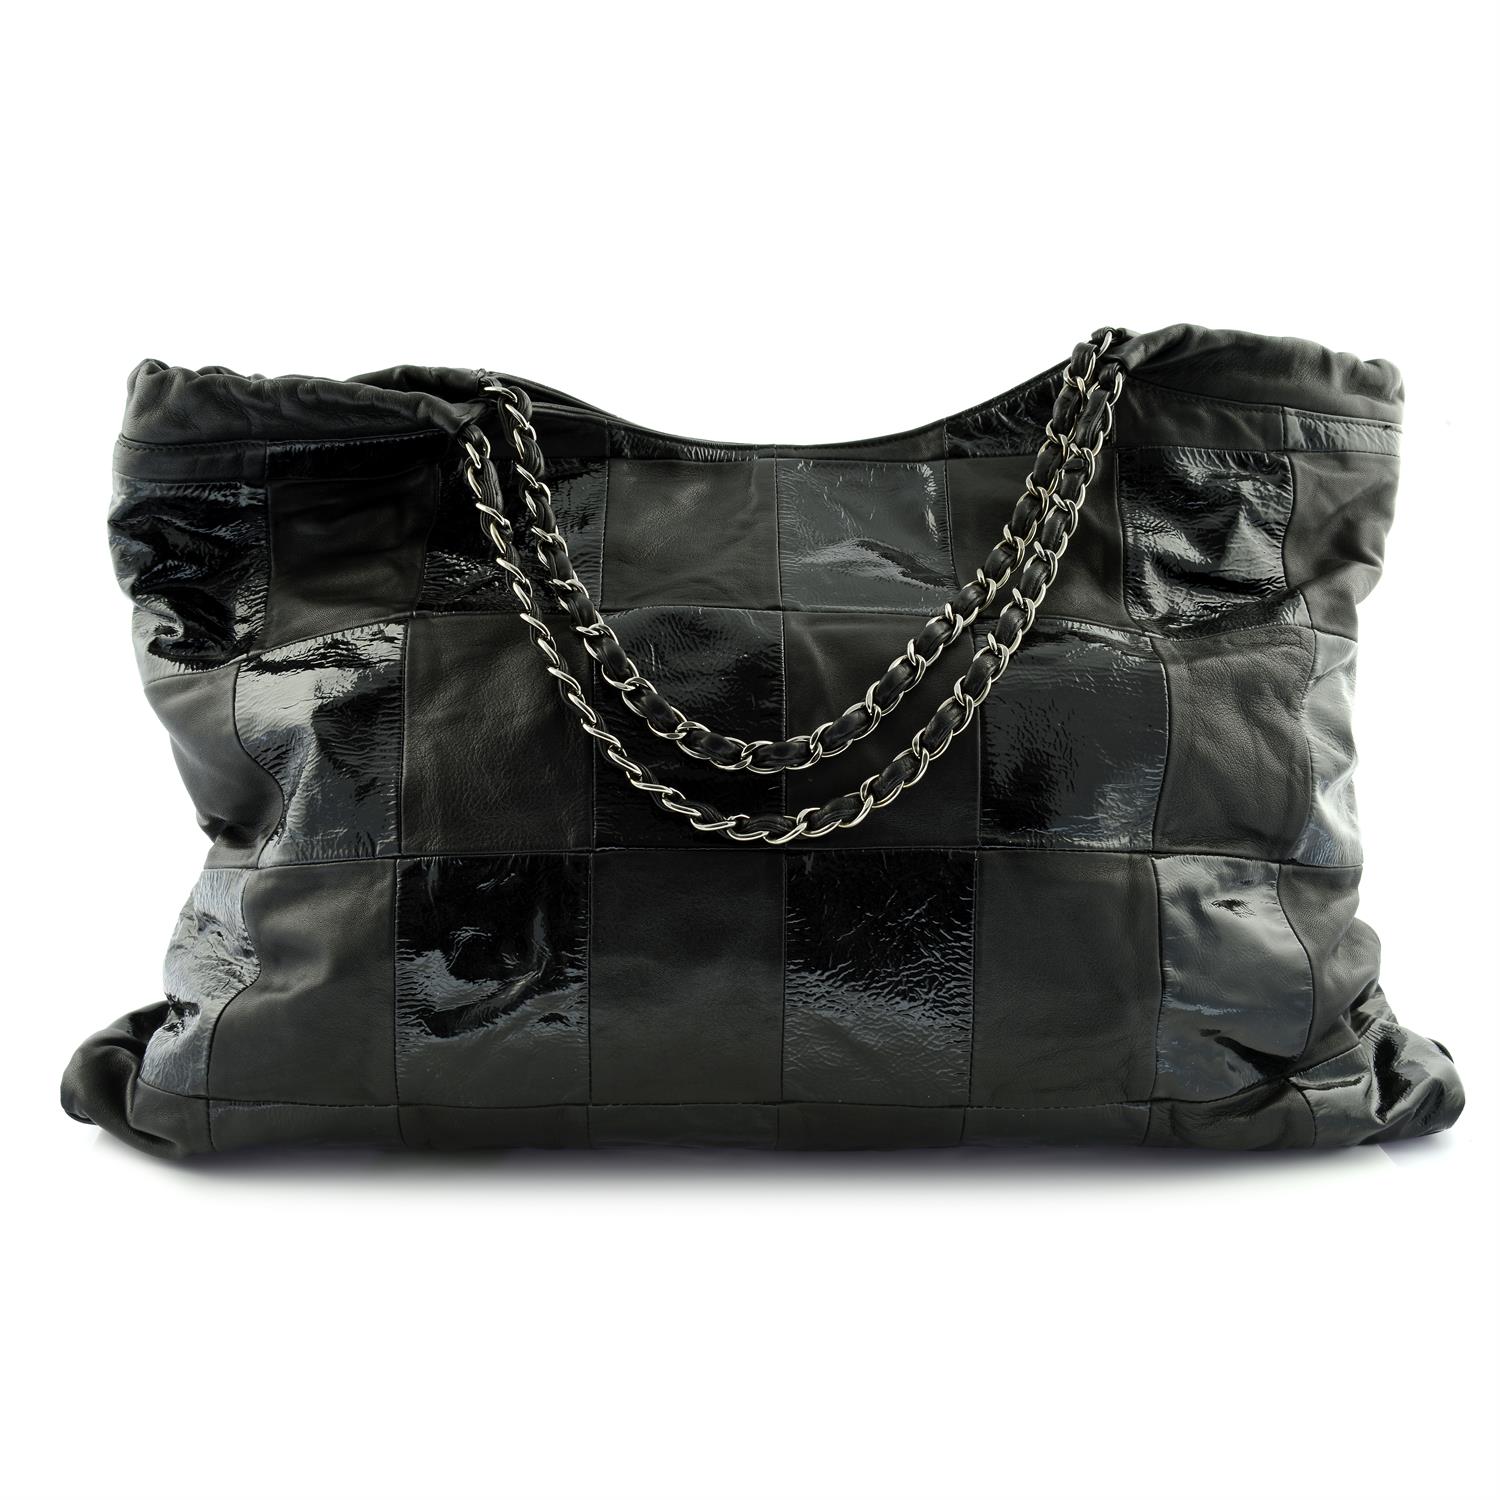 CHANEL - a suede patchwork handbag. - Image 2 of 4